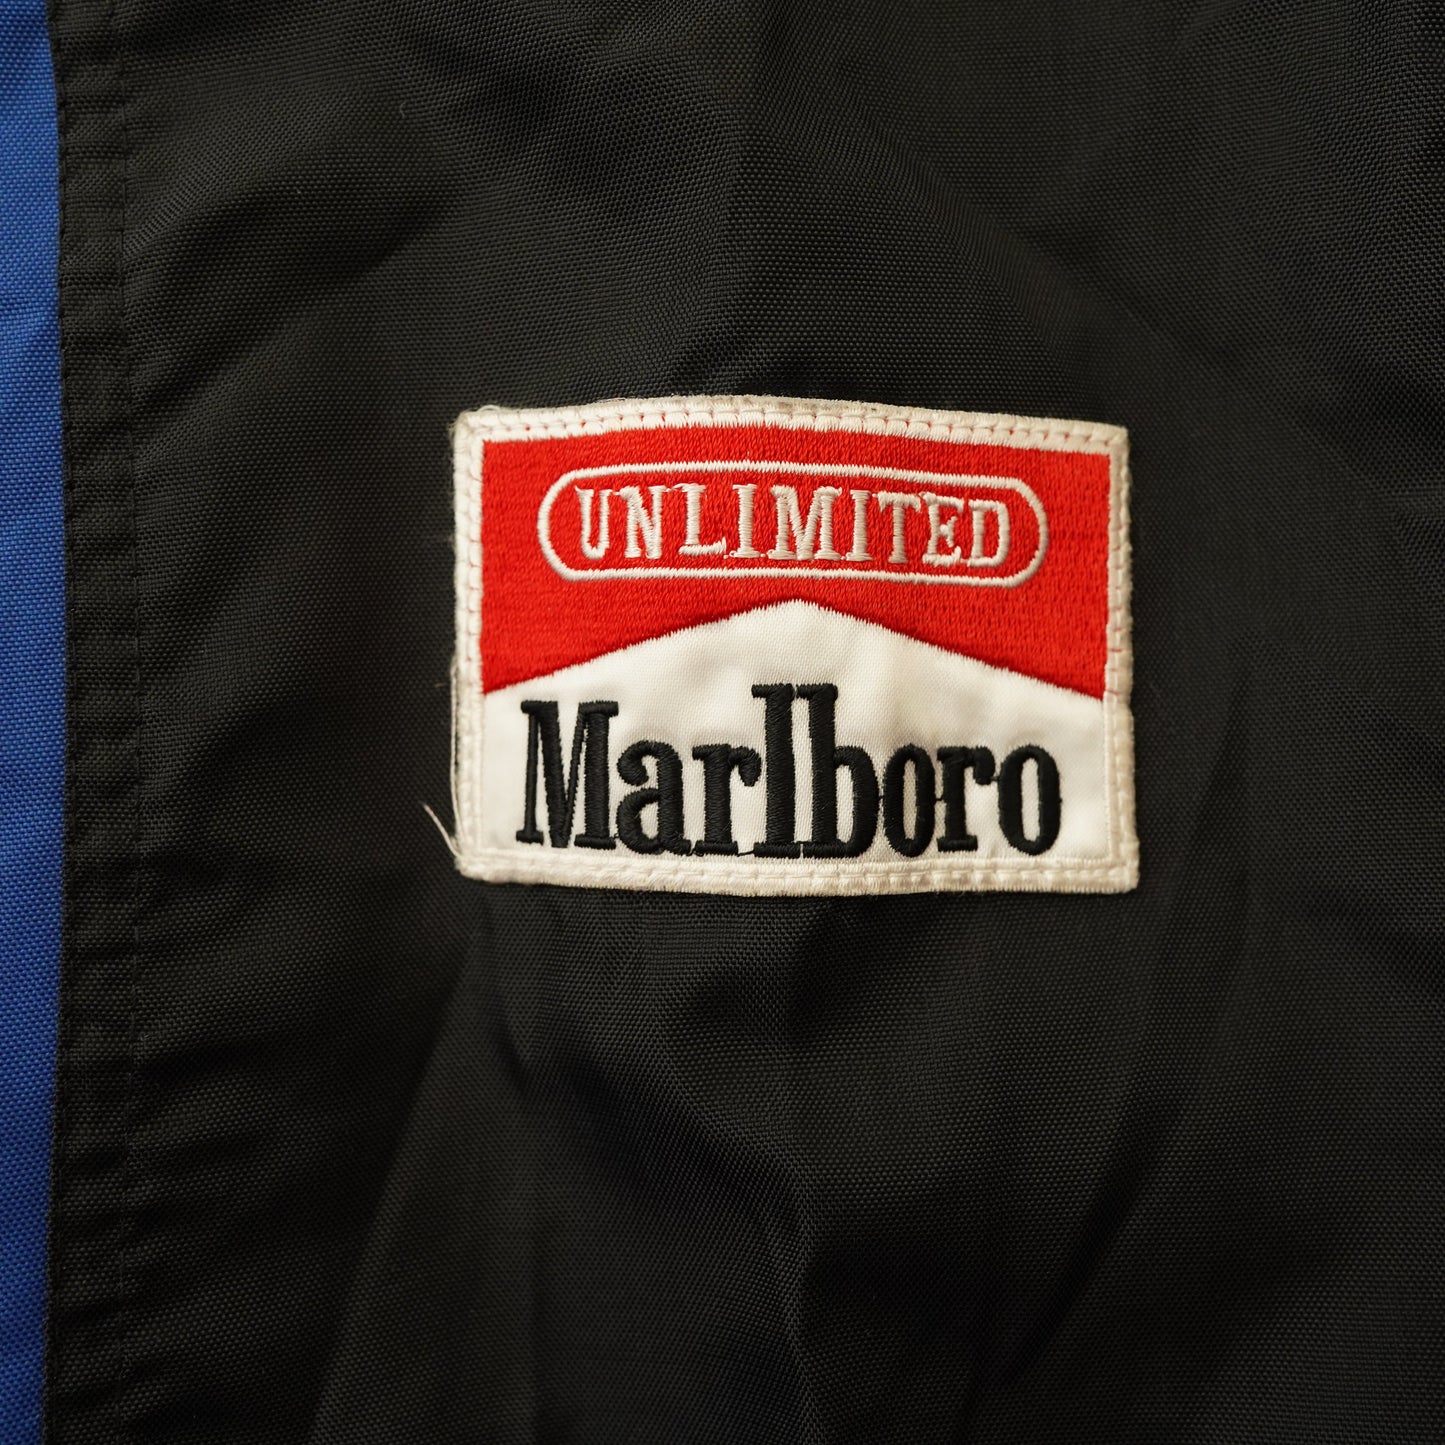 Marlboro nylon jacket